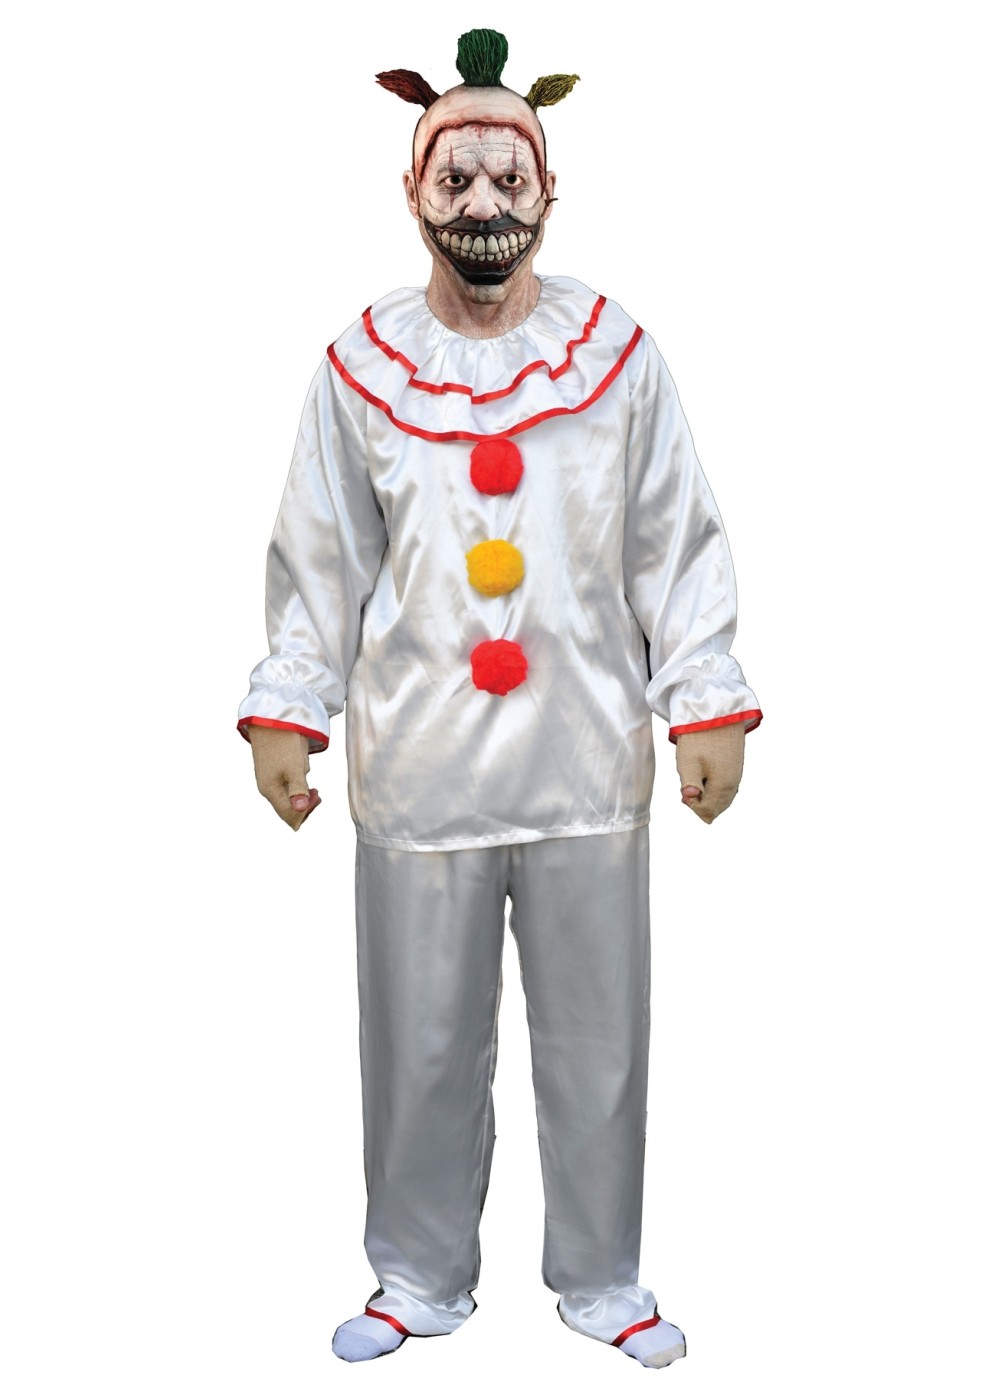 Twisty The Clown Costume Kit